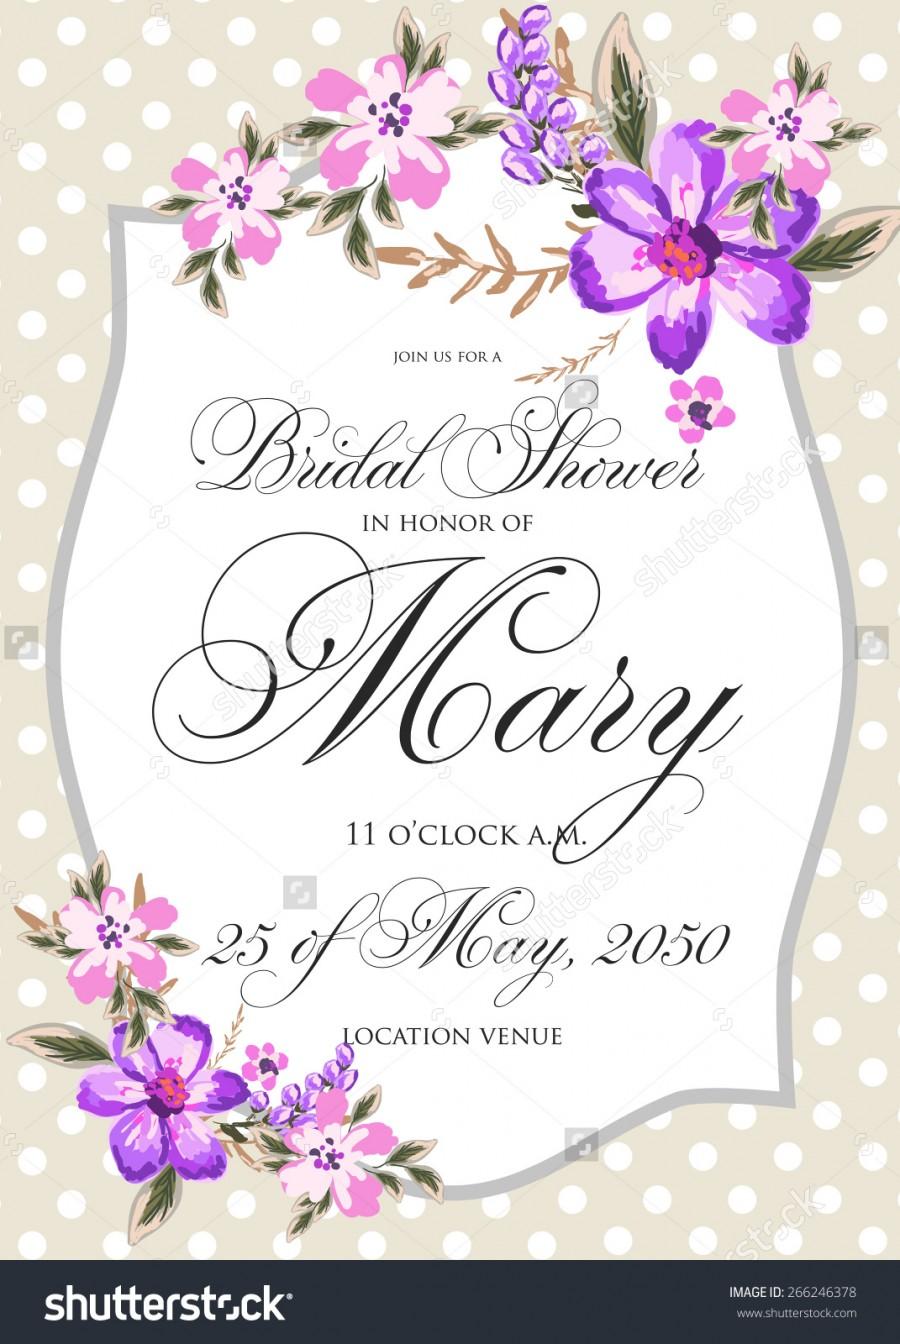 Wedding - Bridal Shower Invitation